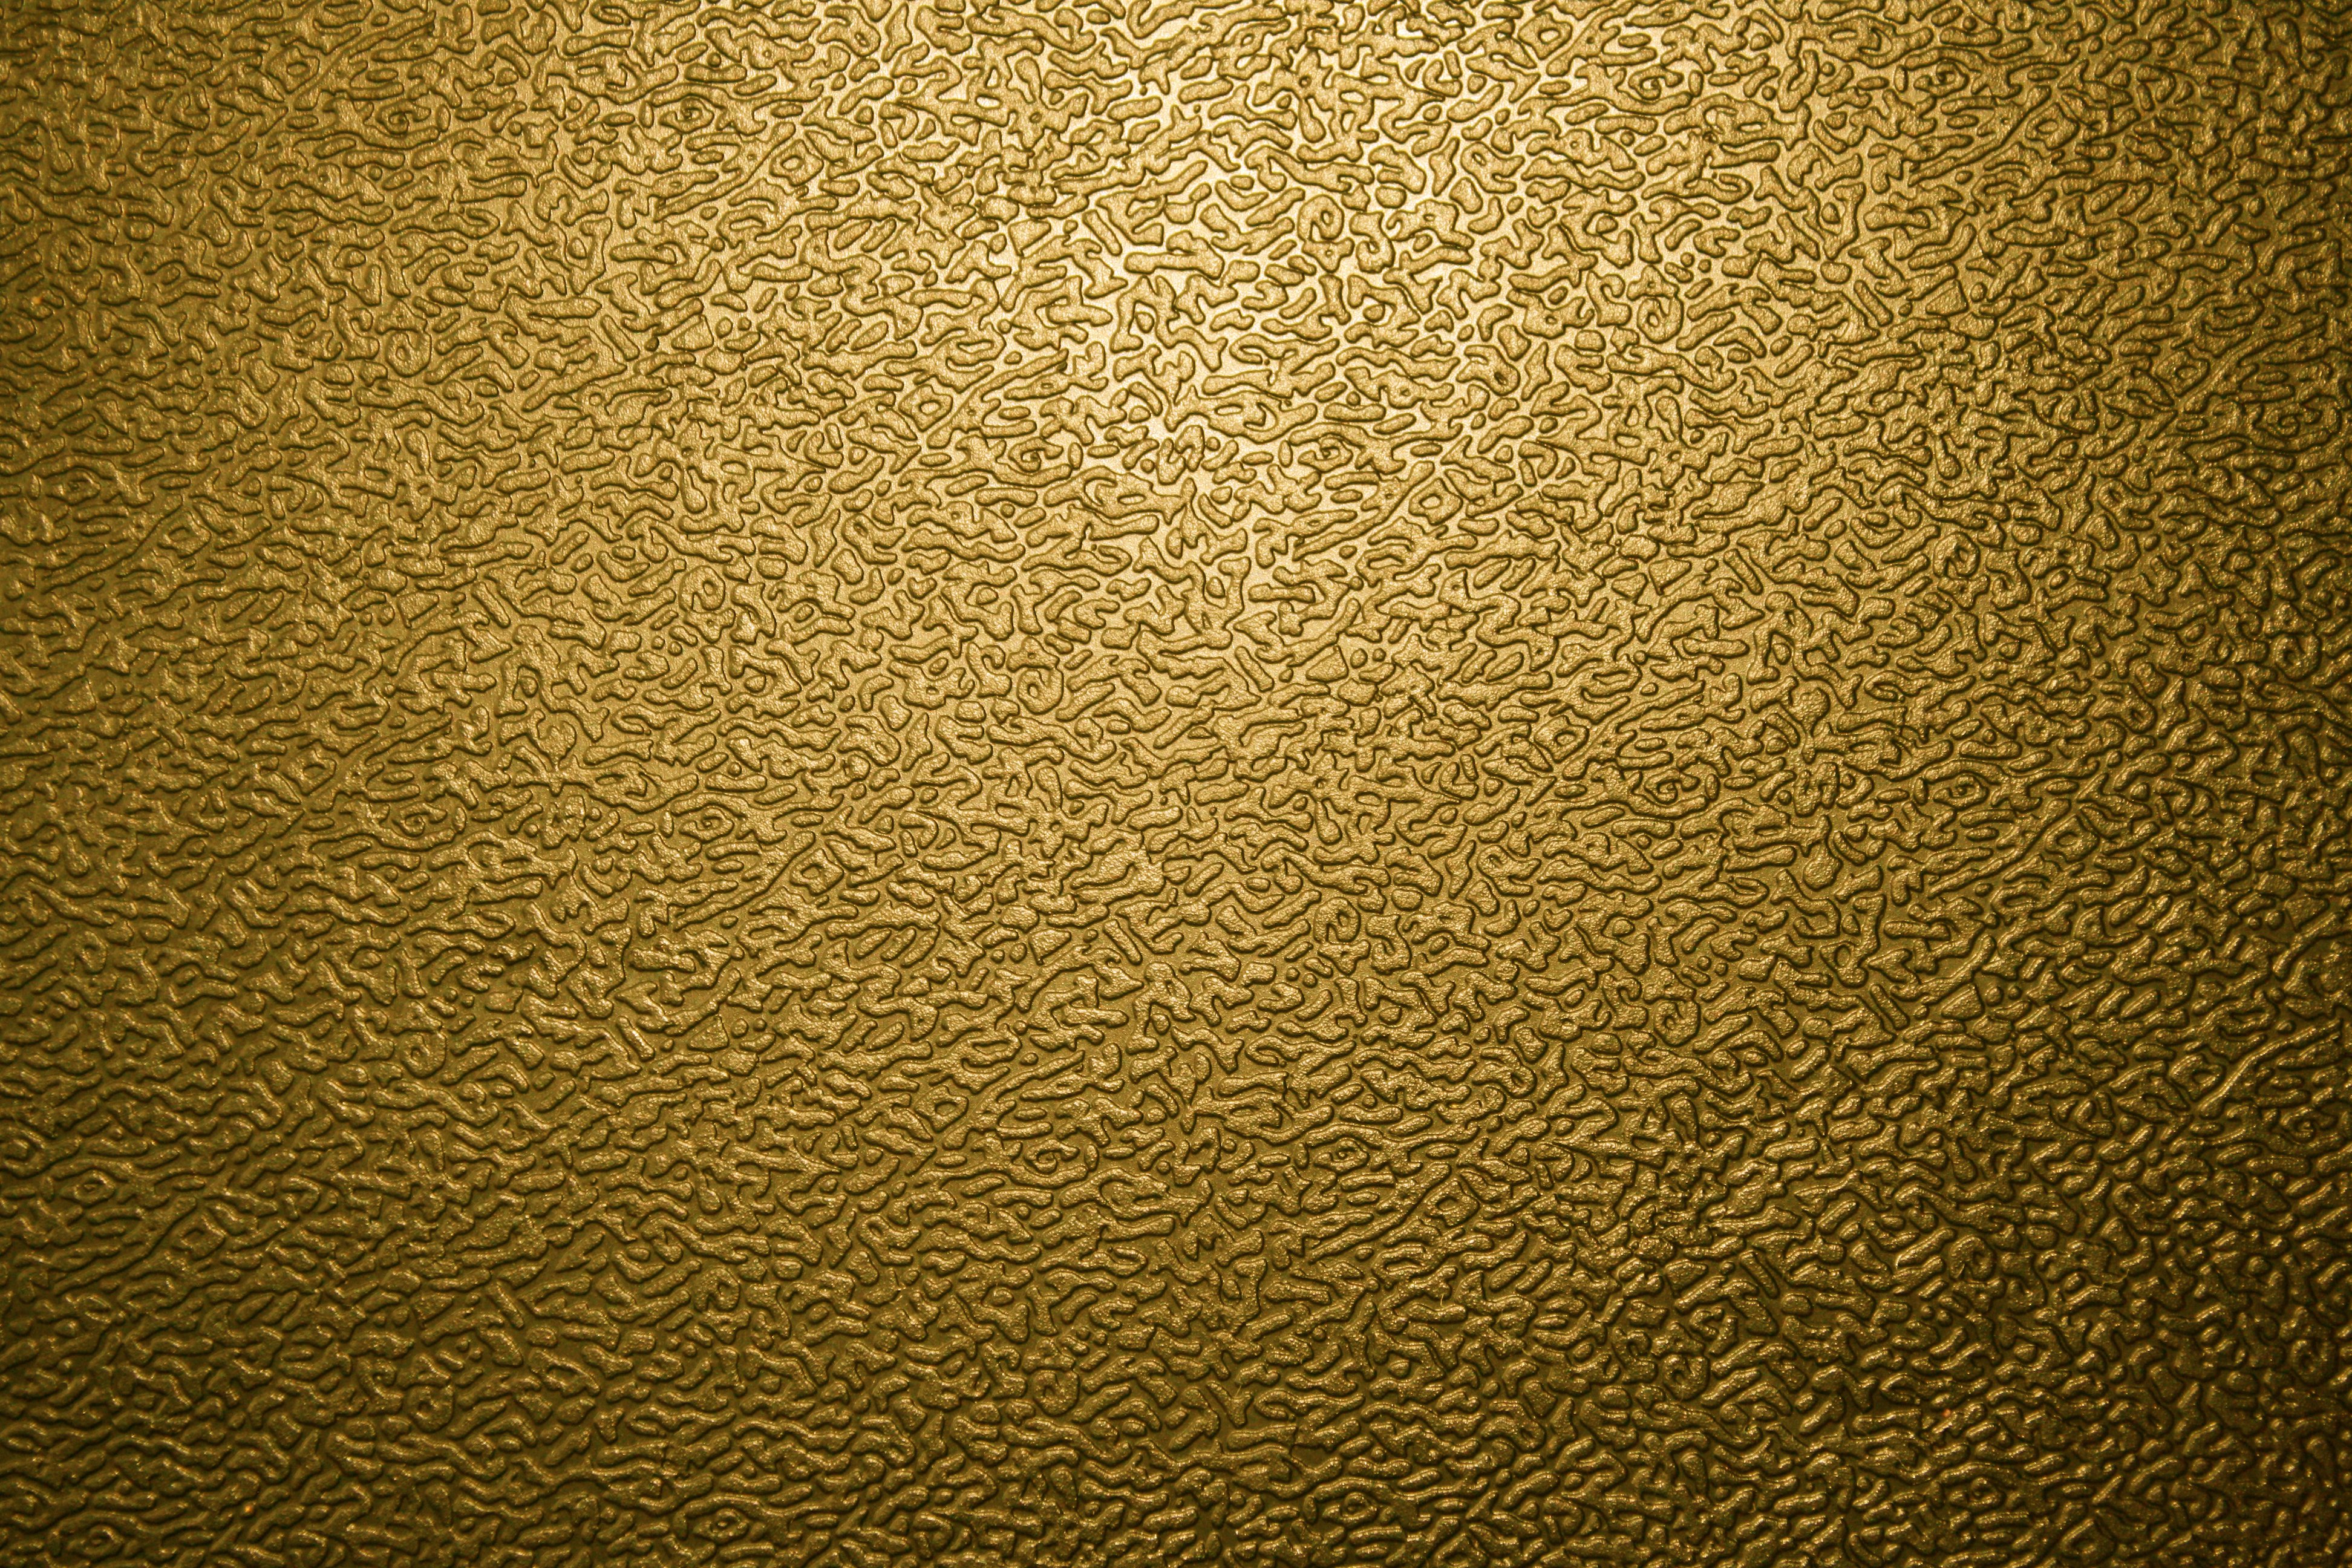 Цвет золотистый обои. Золото металлик lx19240. Золото текстура. Золотистый фон. Текстура золотого металла.